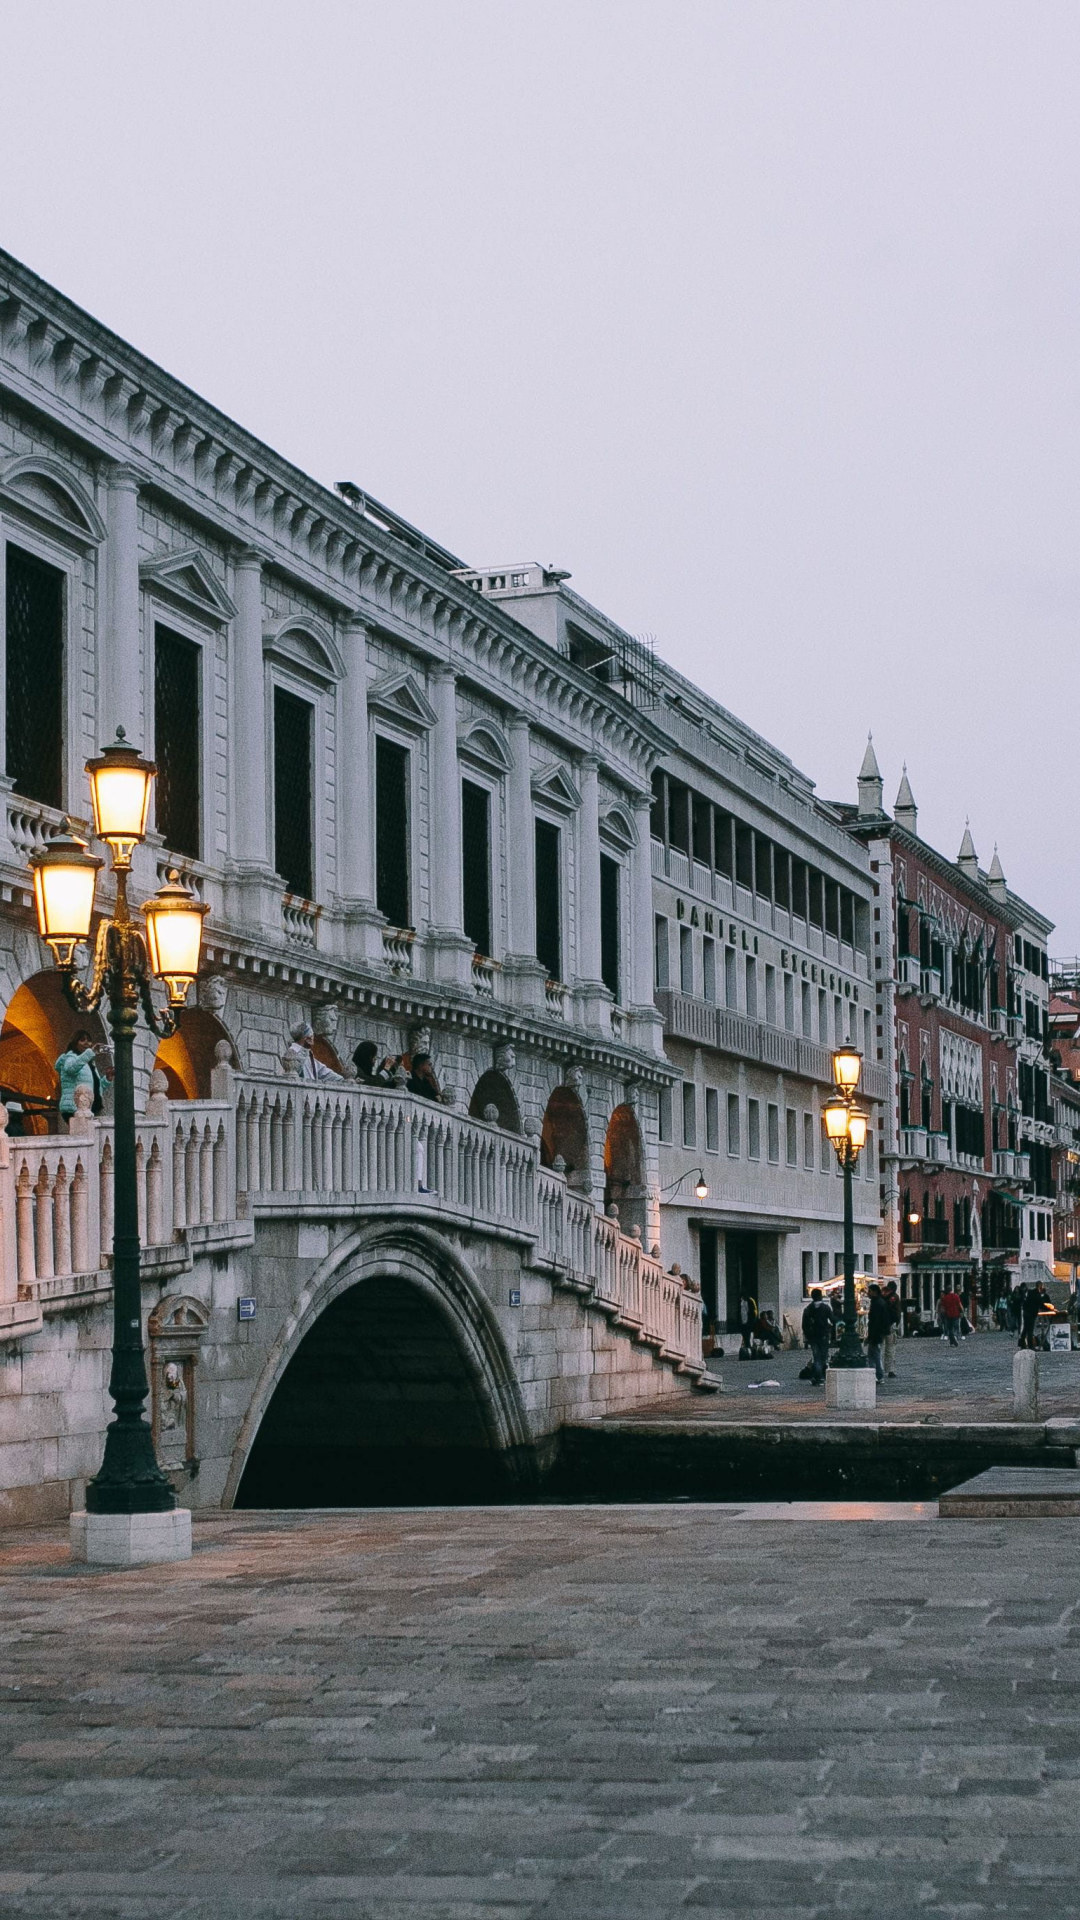 Venice: A home to historic bridges, including the Rialto Bridge and the Bridge of Sighs. 1080x1920 Full HD Wallpaper.